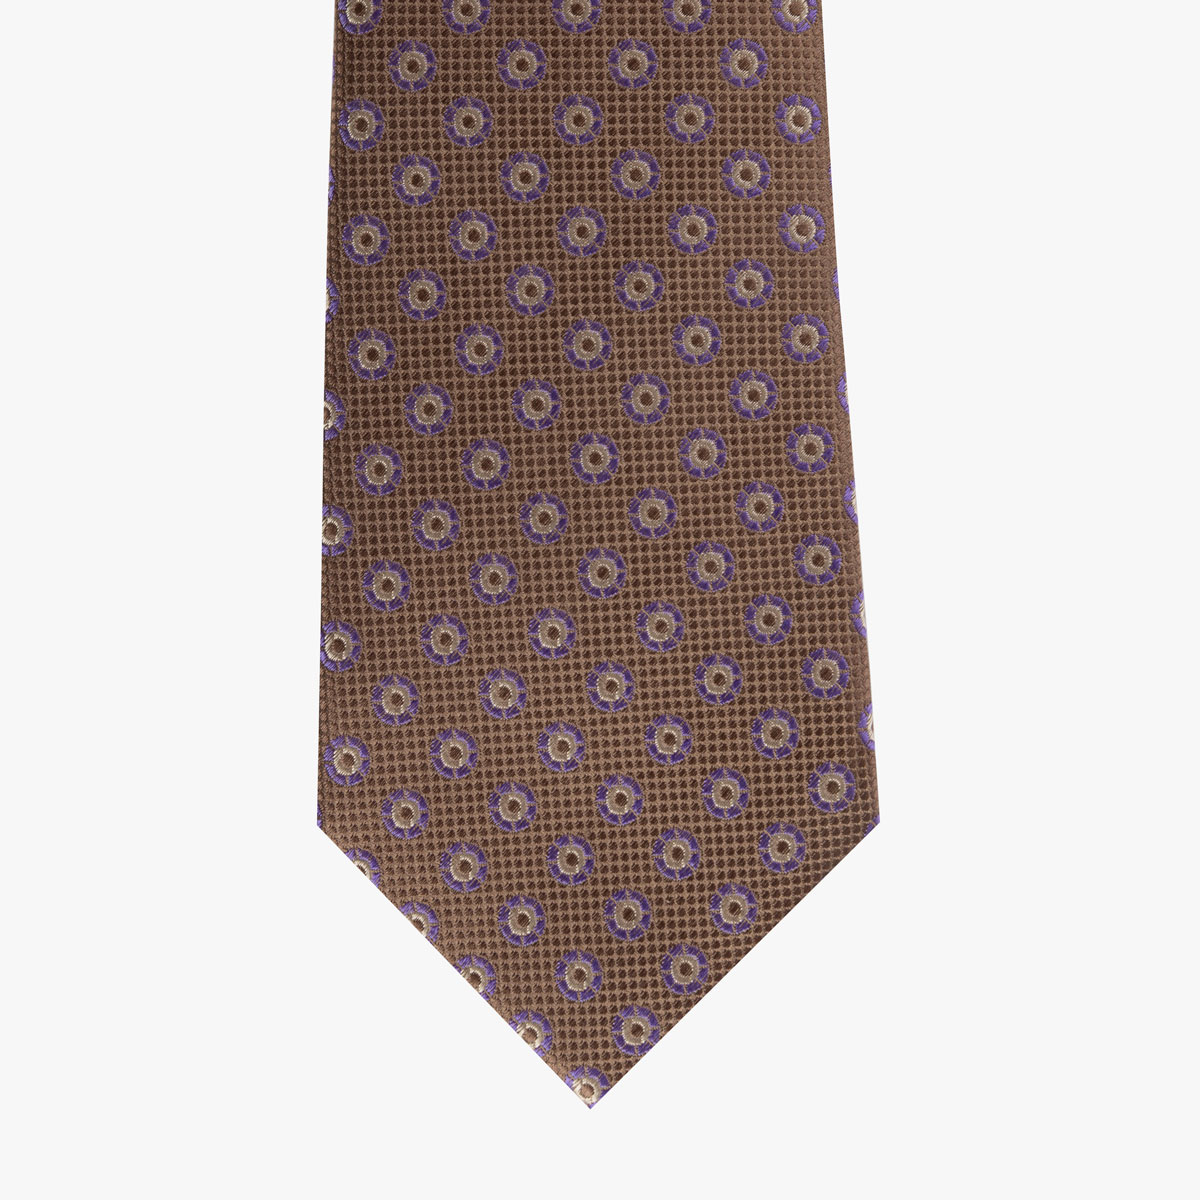 Krawatte aus Seide in braun mit lila Muster